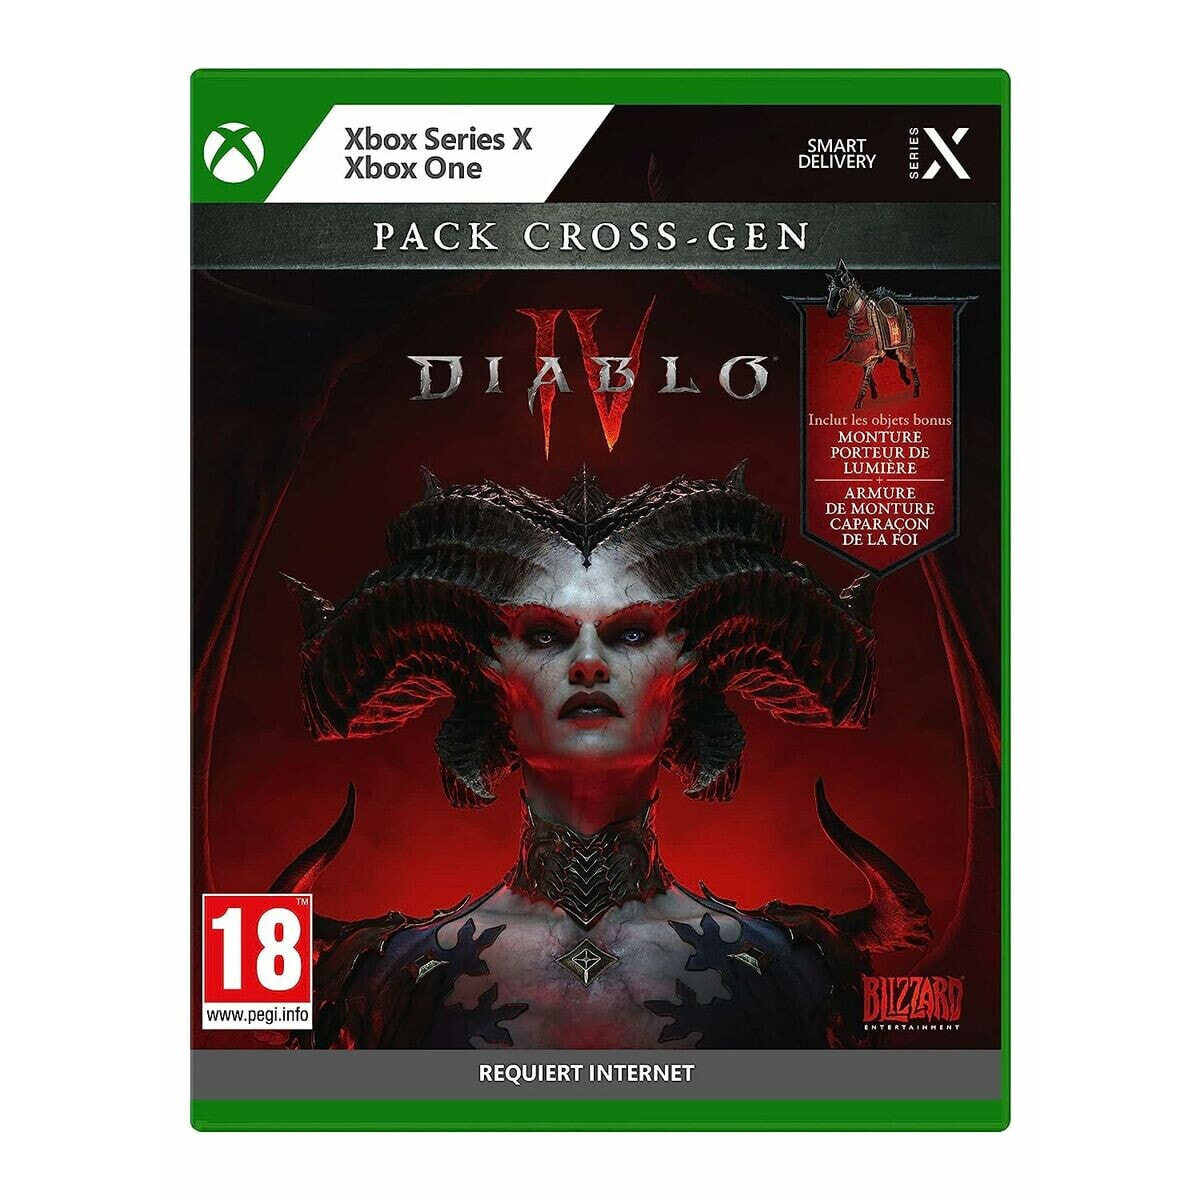 Xbox One / Series X Video Game Blizzard Diablo IV